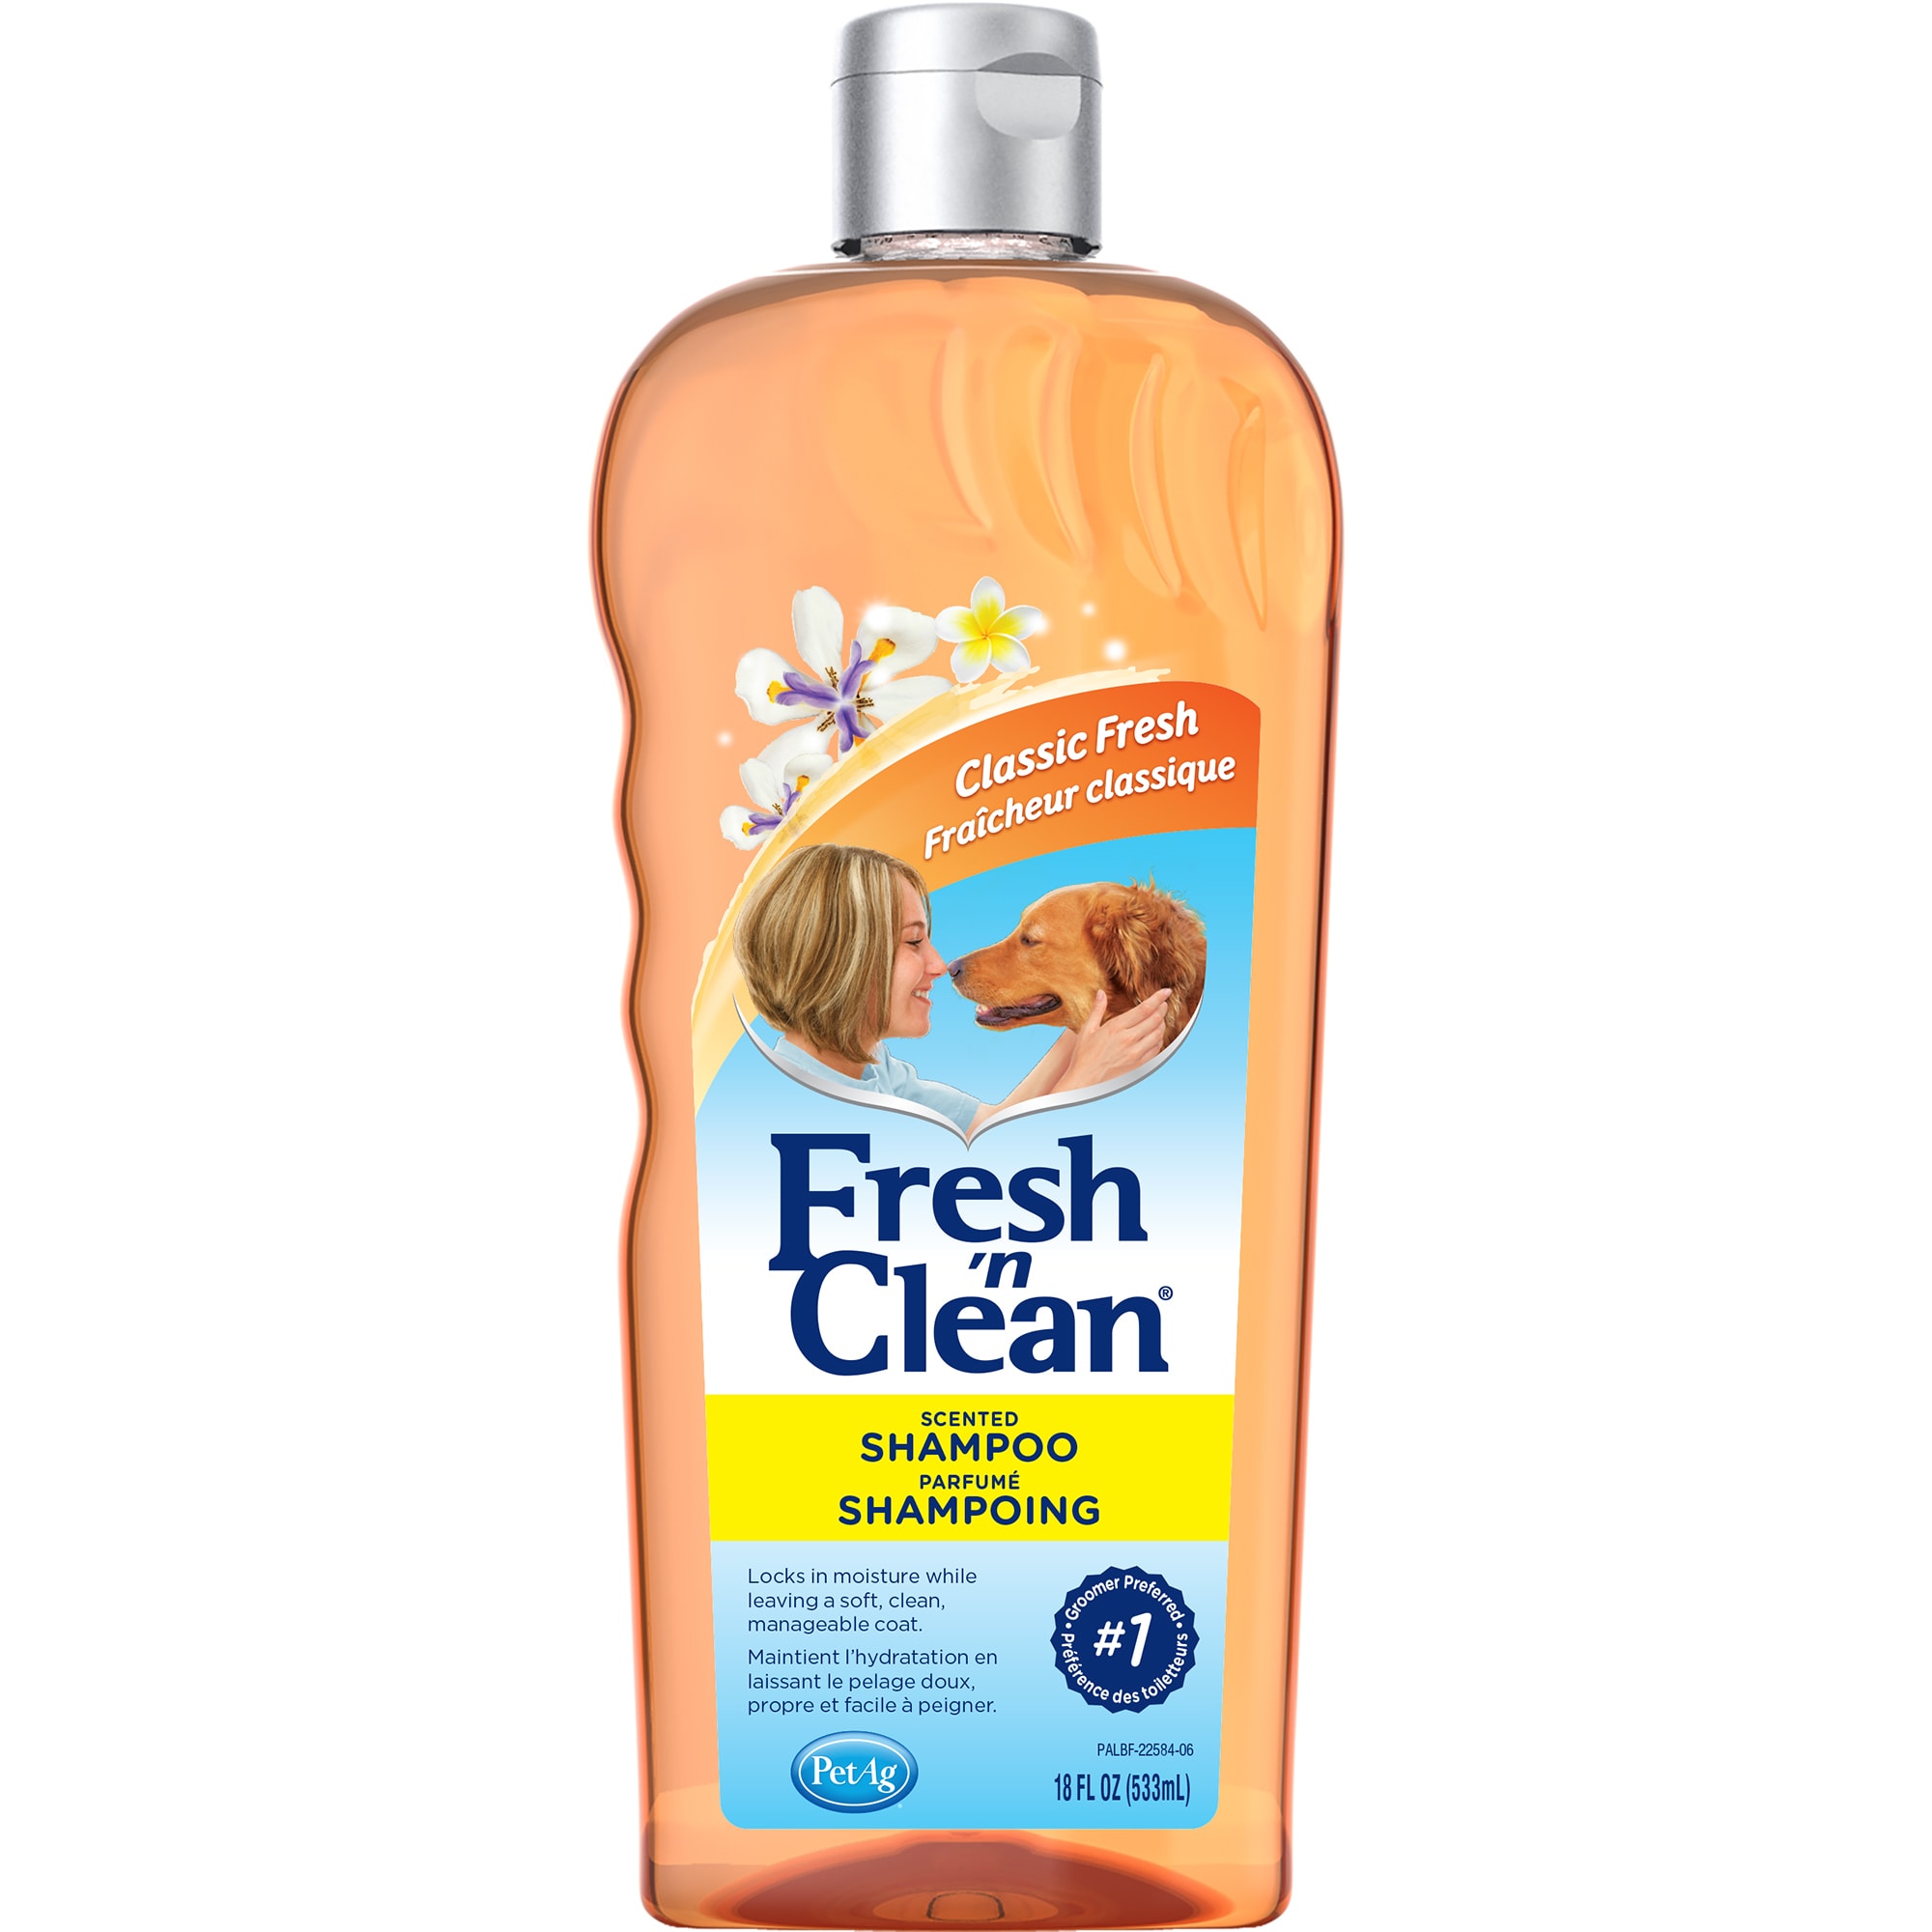 fresh n clean dog shampoo